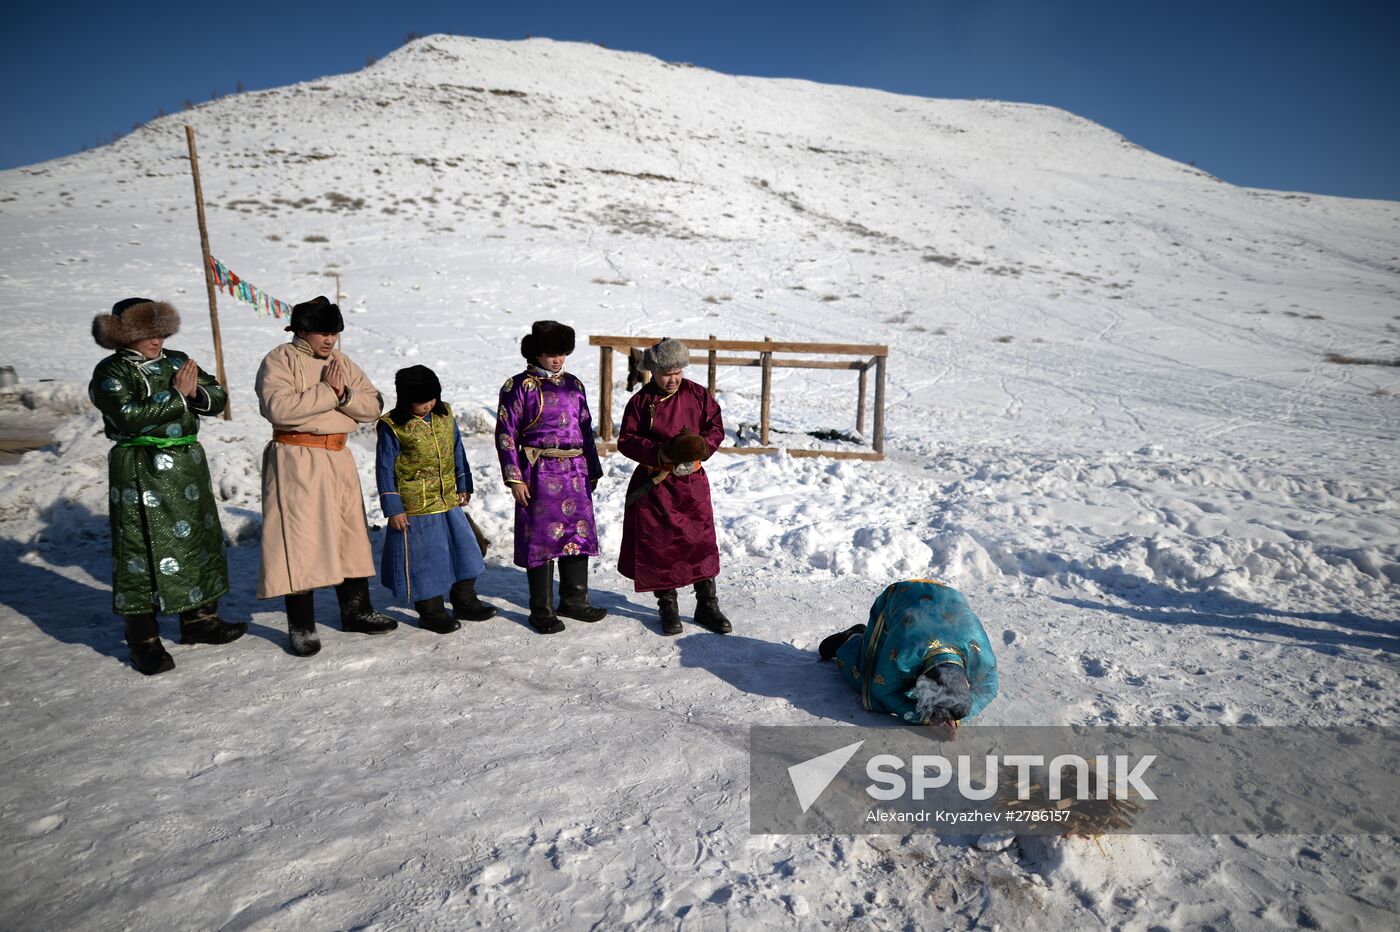 Winter sheep ranges in Republic of Tuva